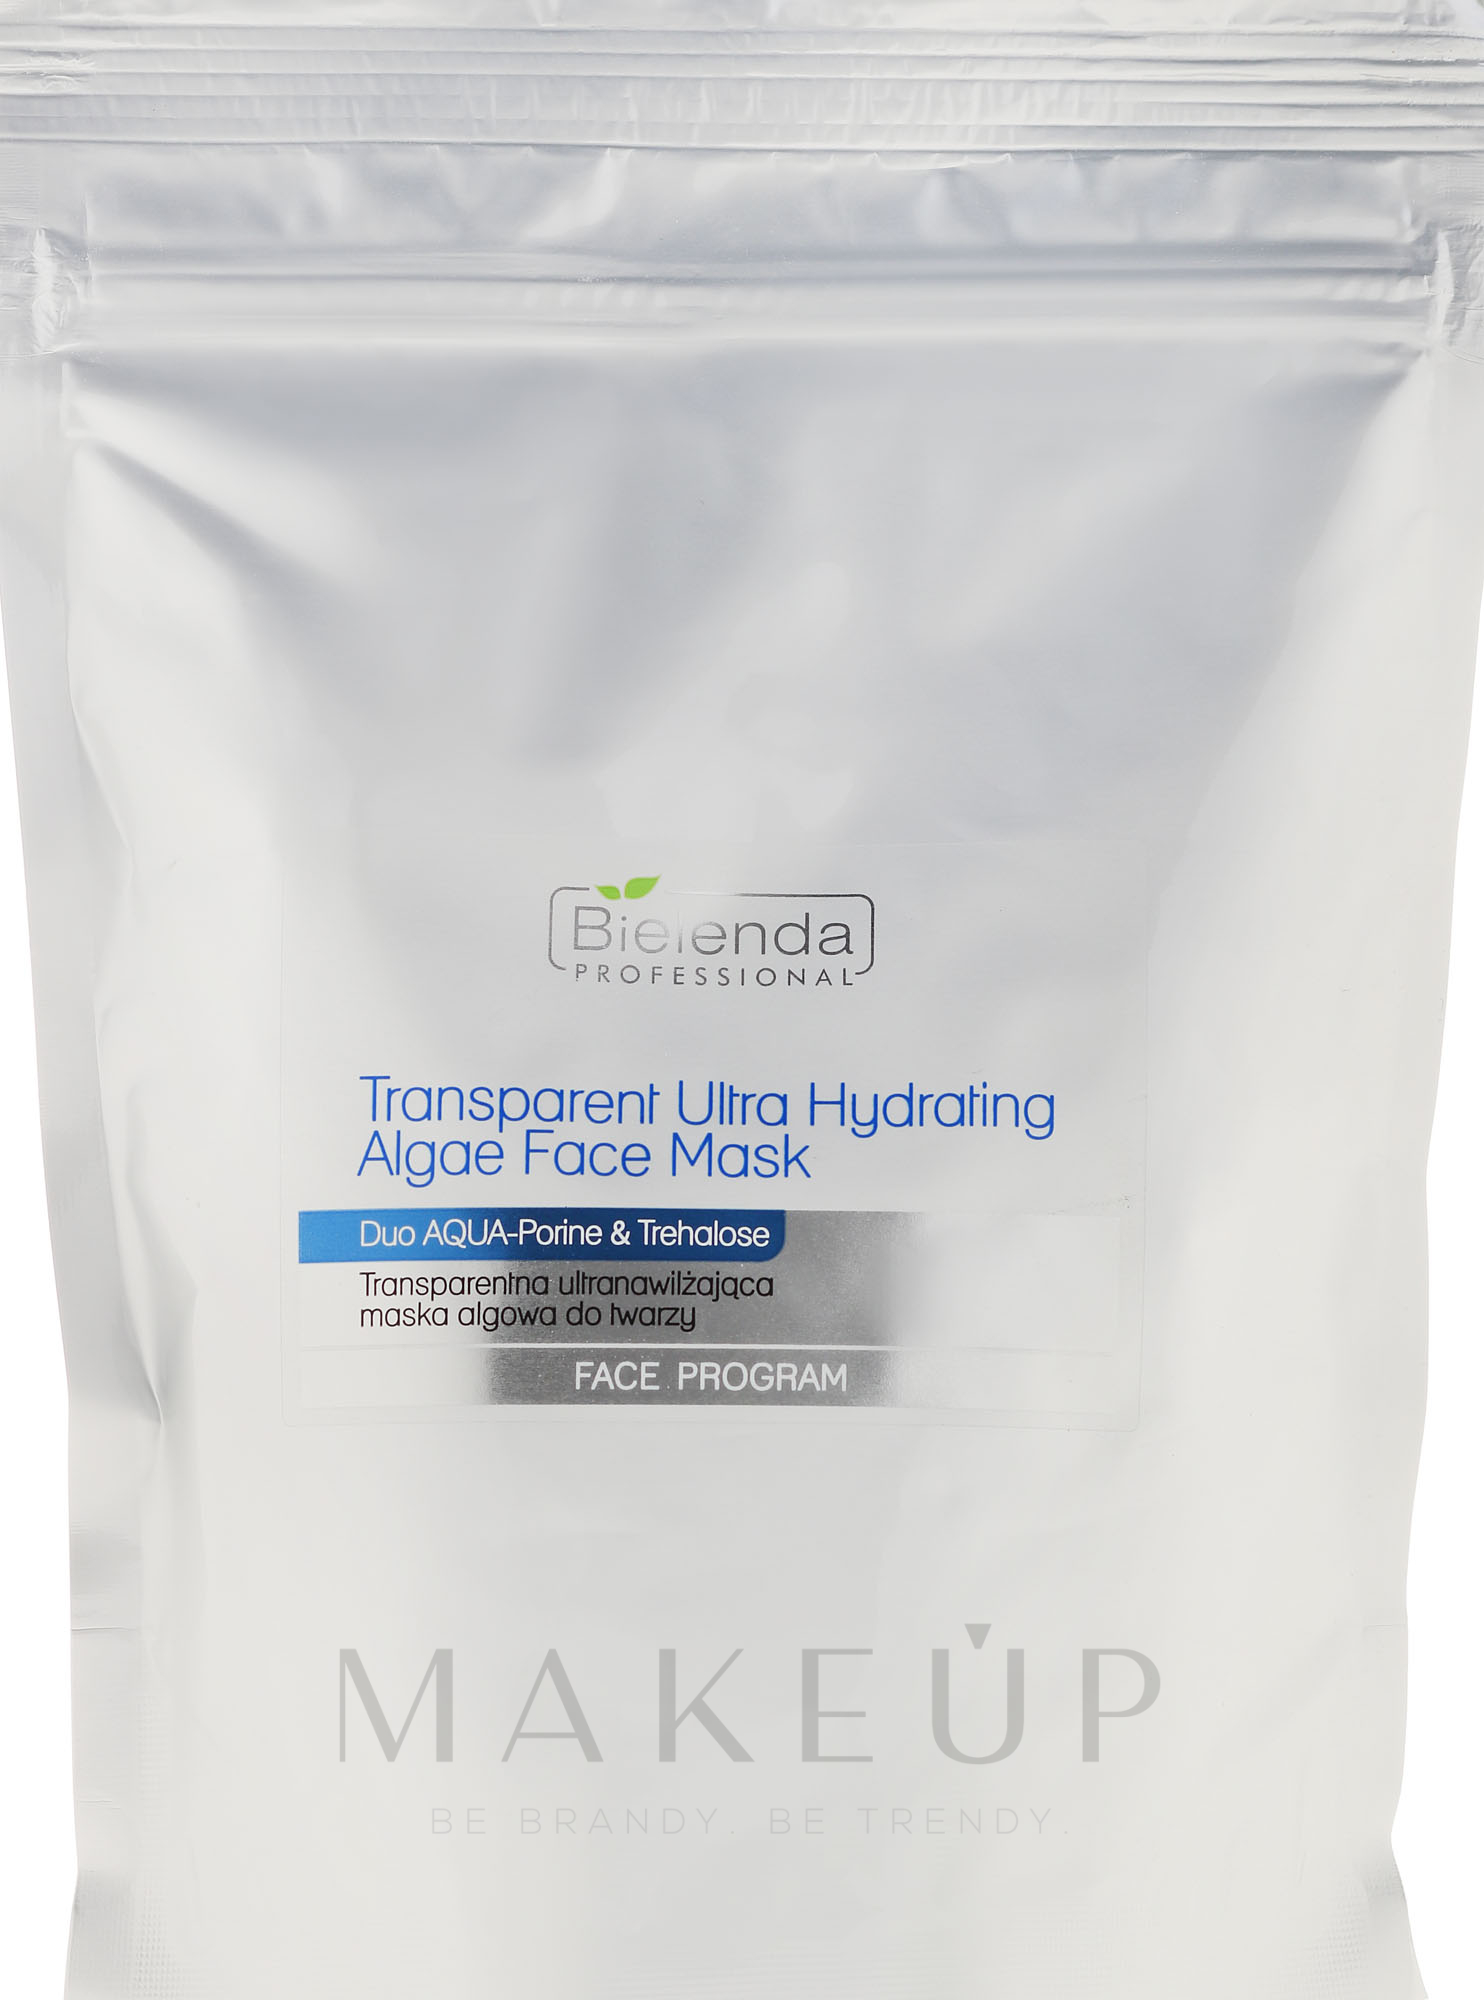 Intensiv feuchtigkeitsspendende Algen-Gesichtsmaske - Bielenda Professional Face Program Transparent Ultra Hydrating Algae Face Mask — Foto 190 g